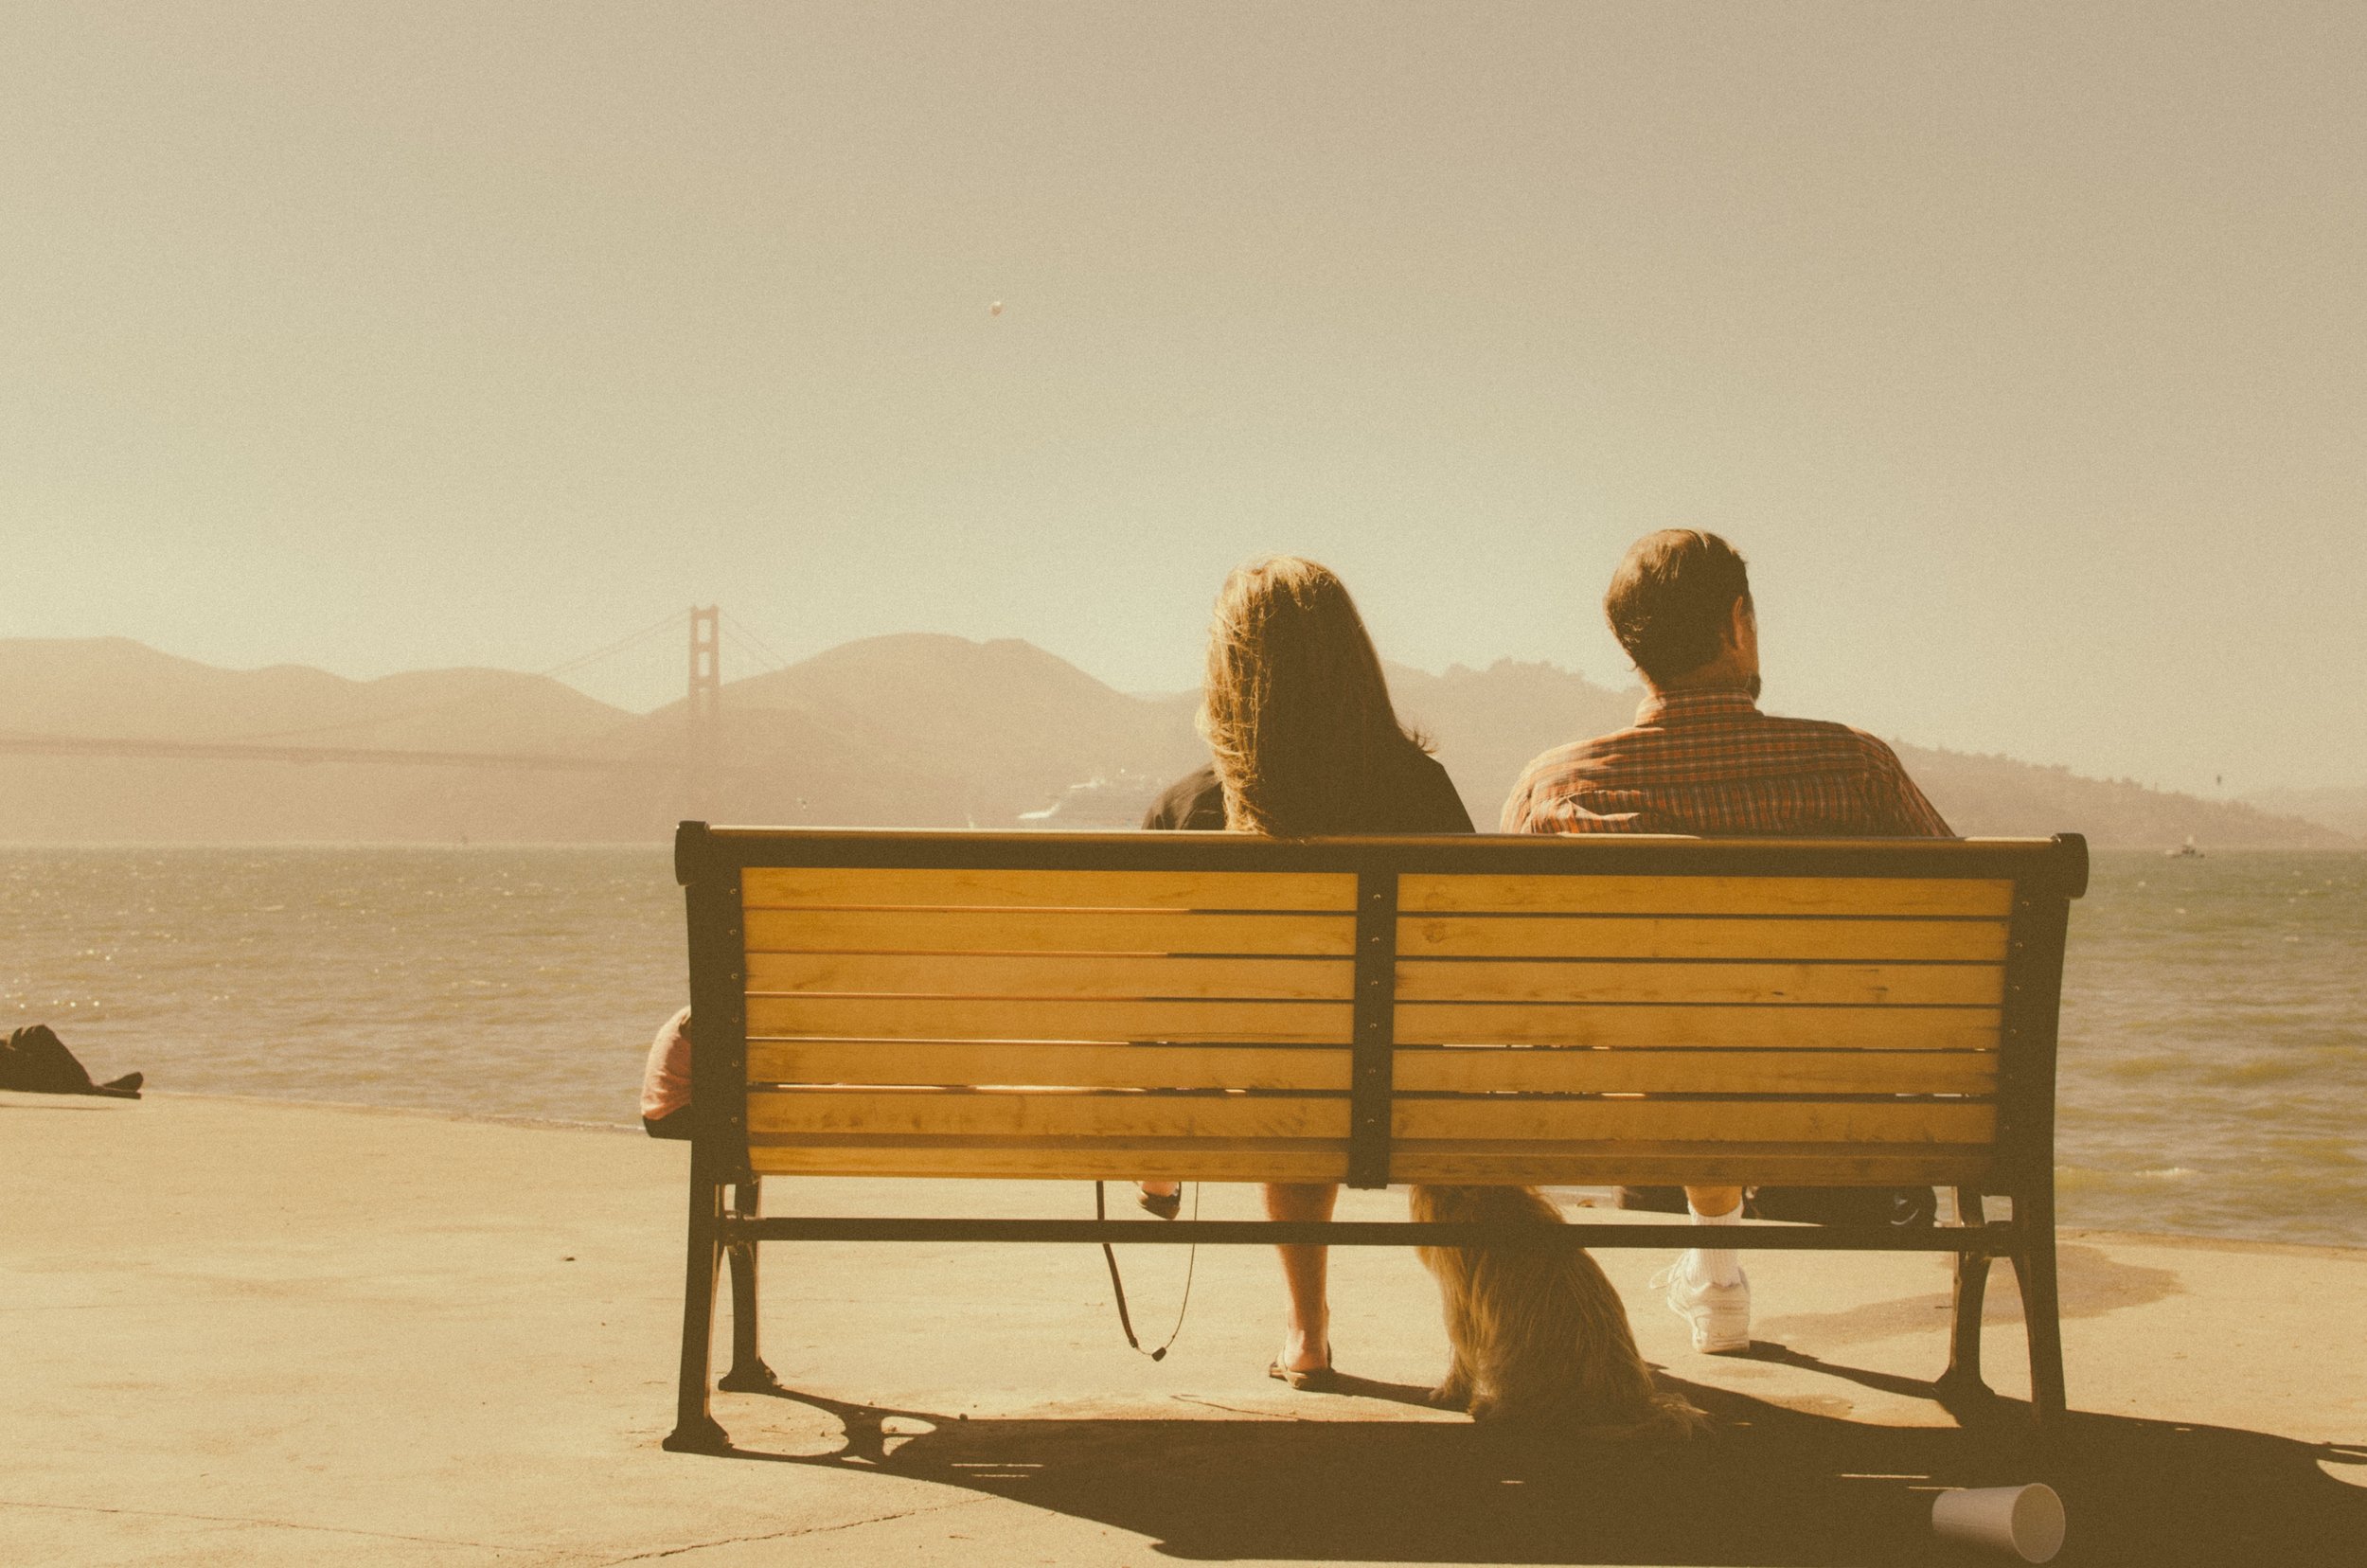 couple on a bench faith transition